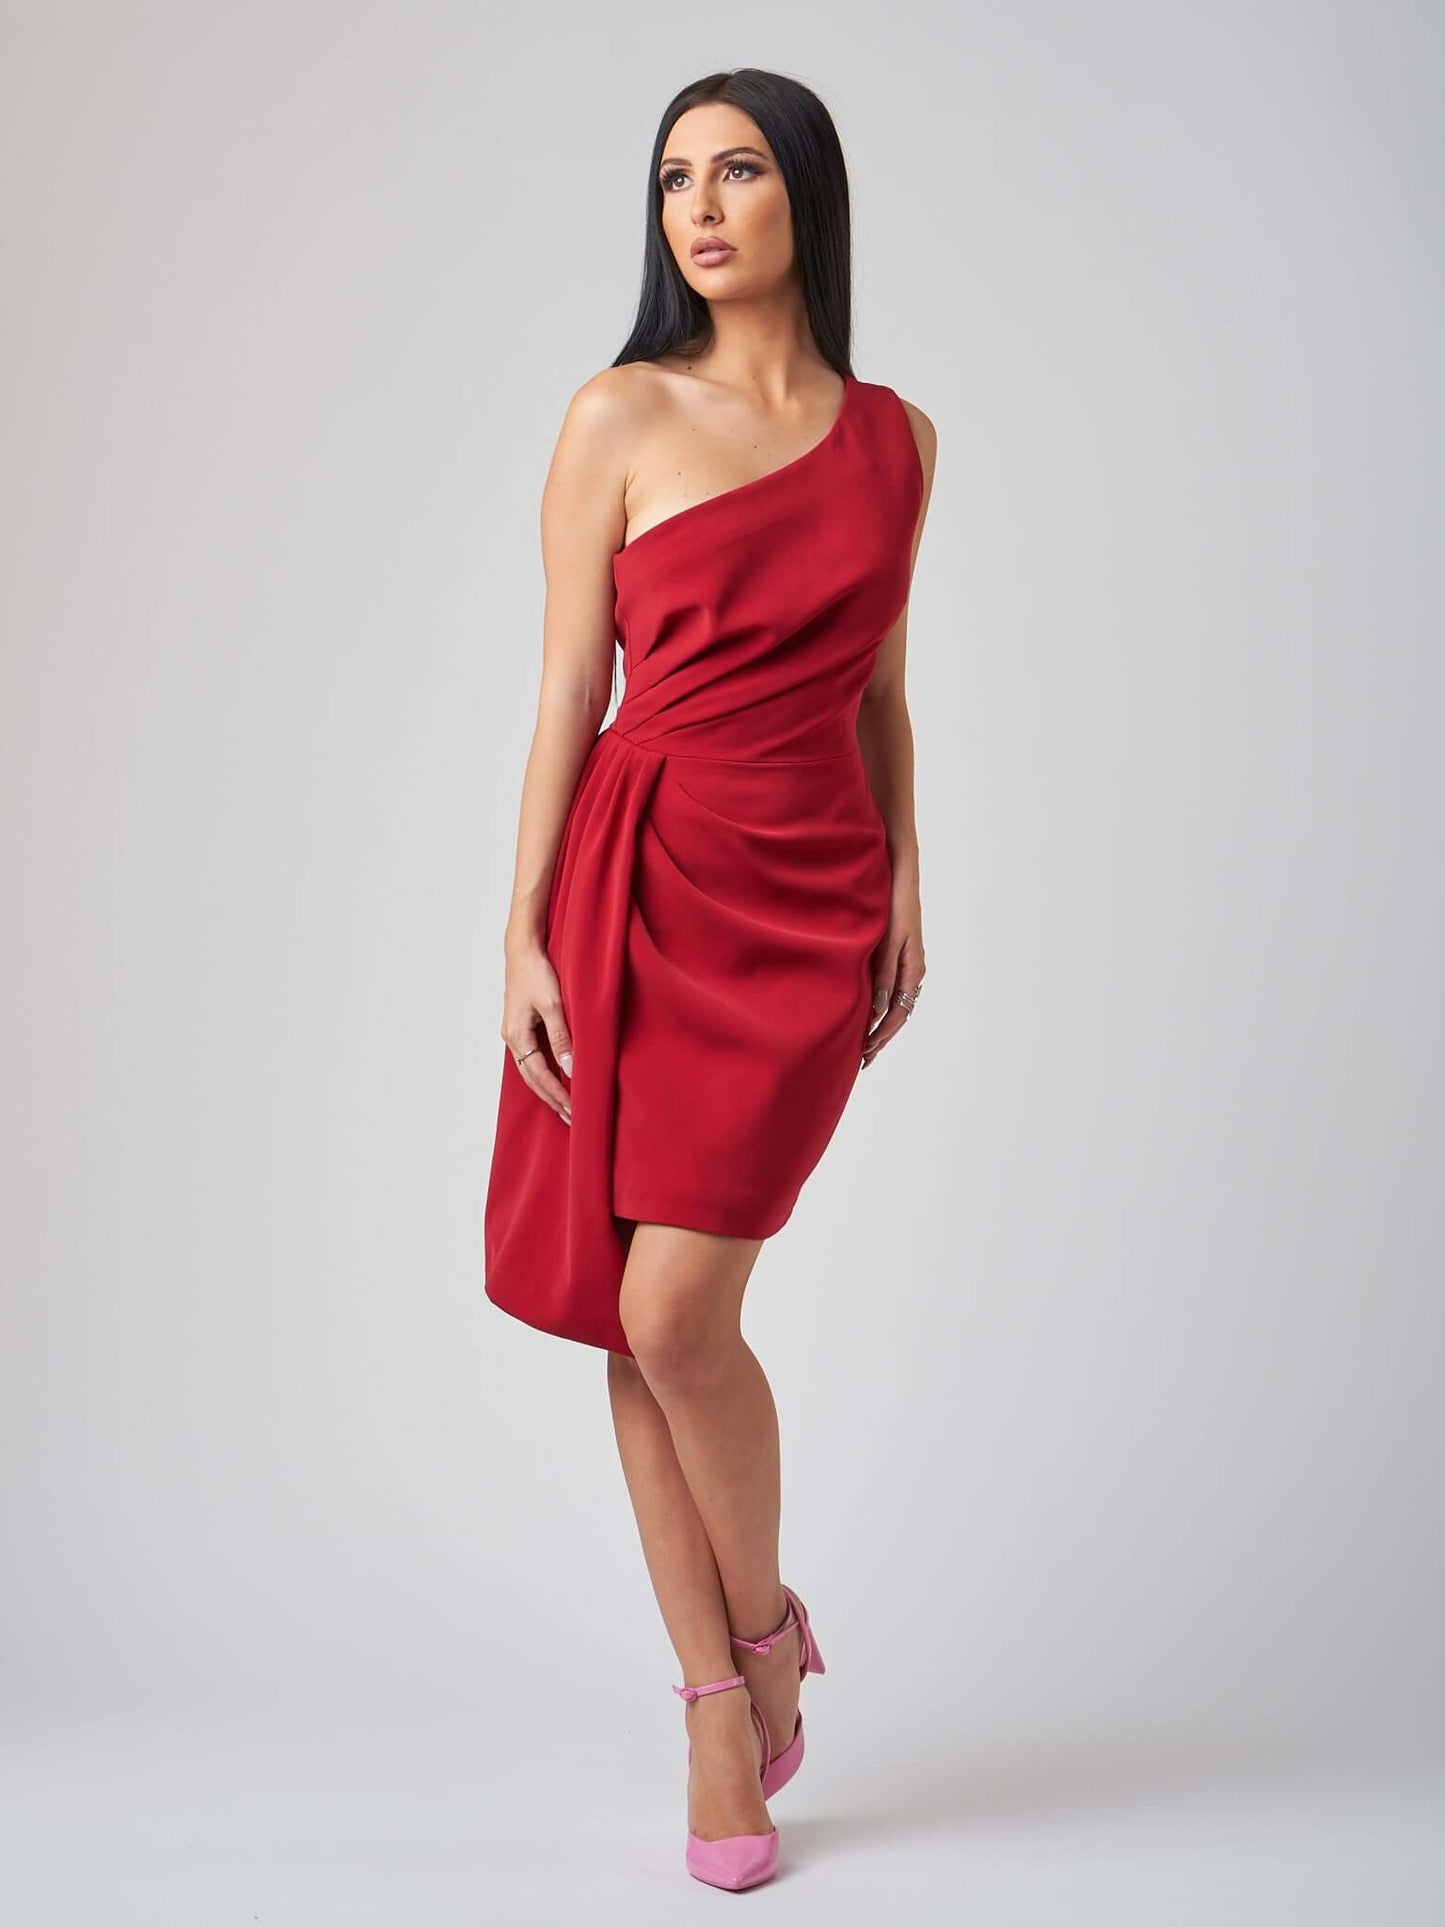 Iconic Glamour Short Dress - Fierce Red by Tia Dorraine Women's Luxury Fashion Designer Clothing Brand